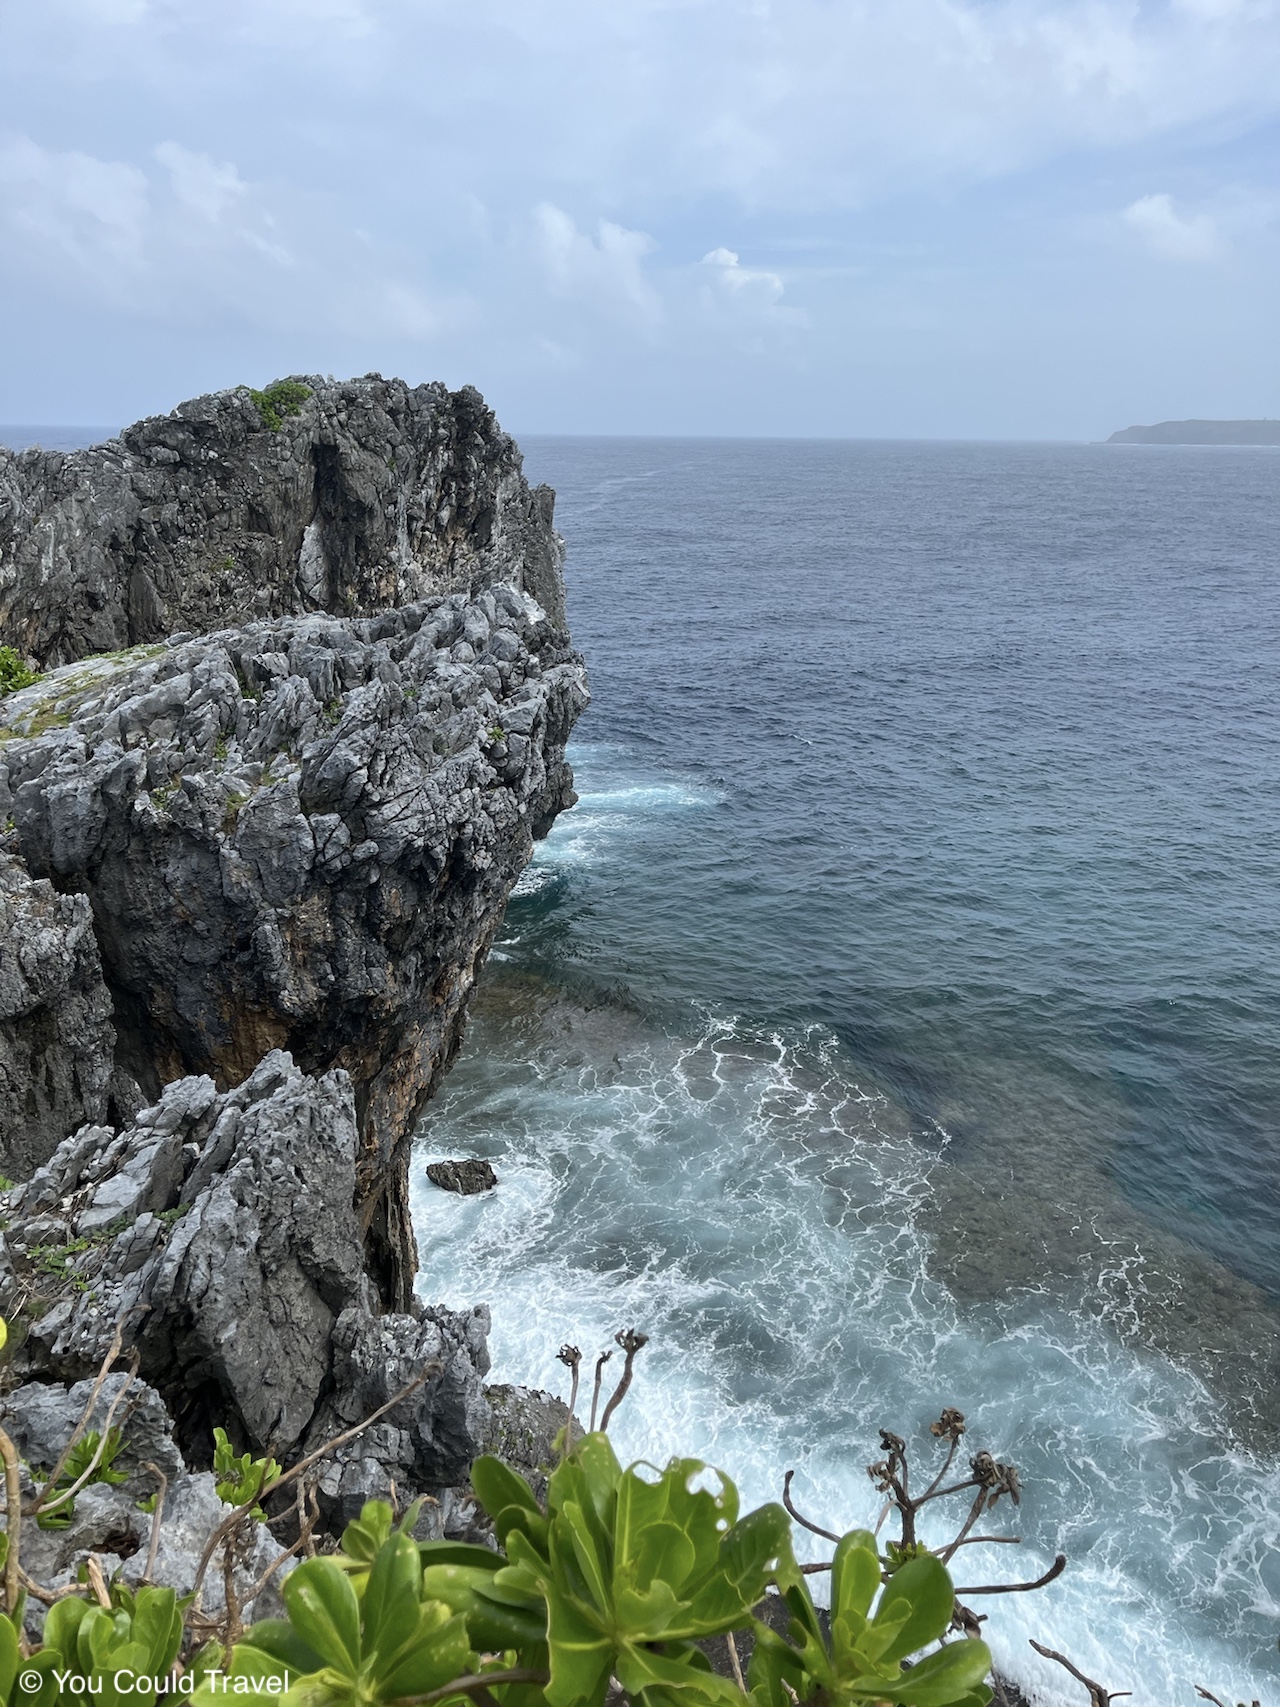 Beautiful landscape at Cape Hedo in Okinawa